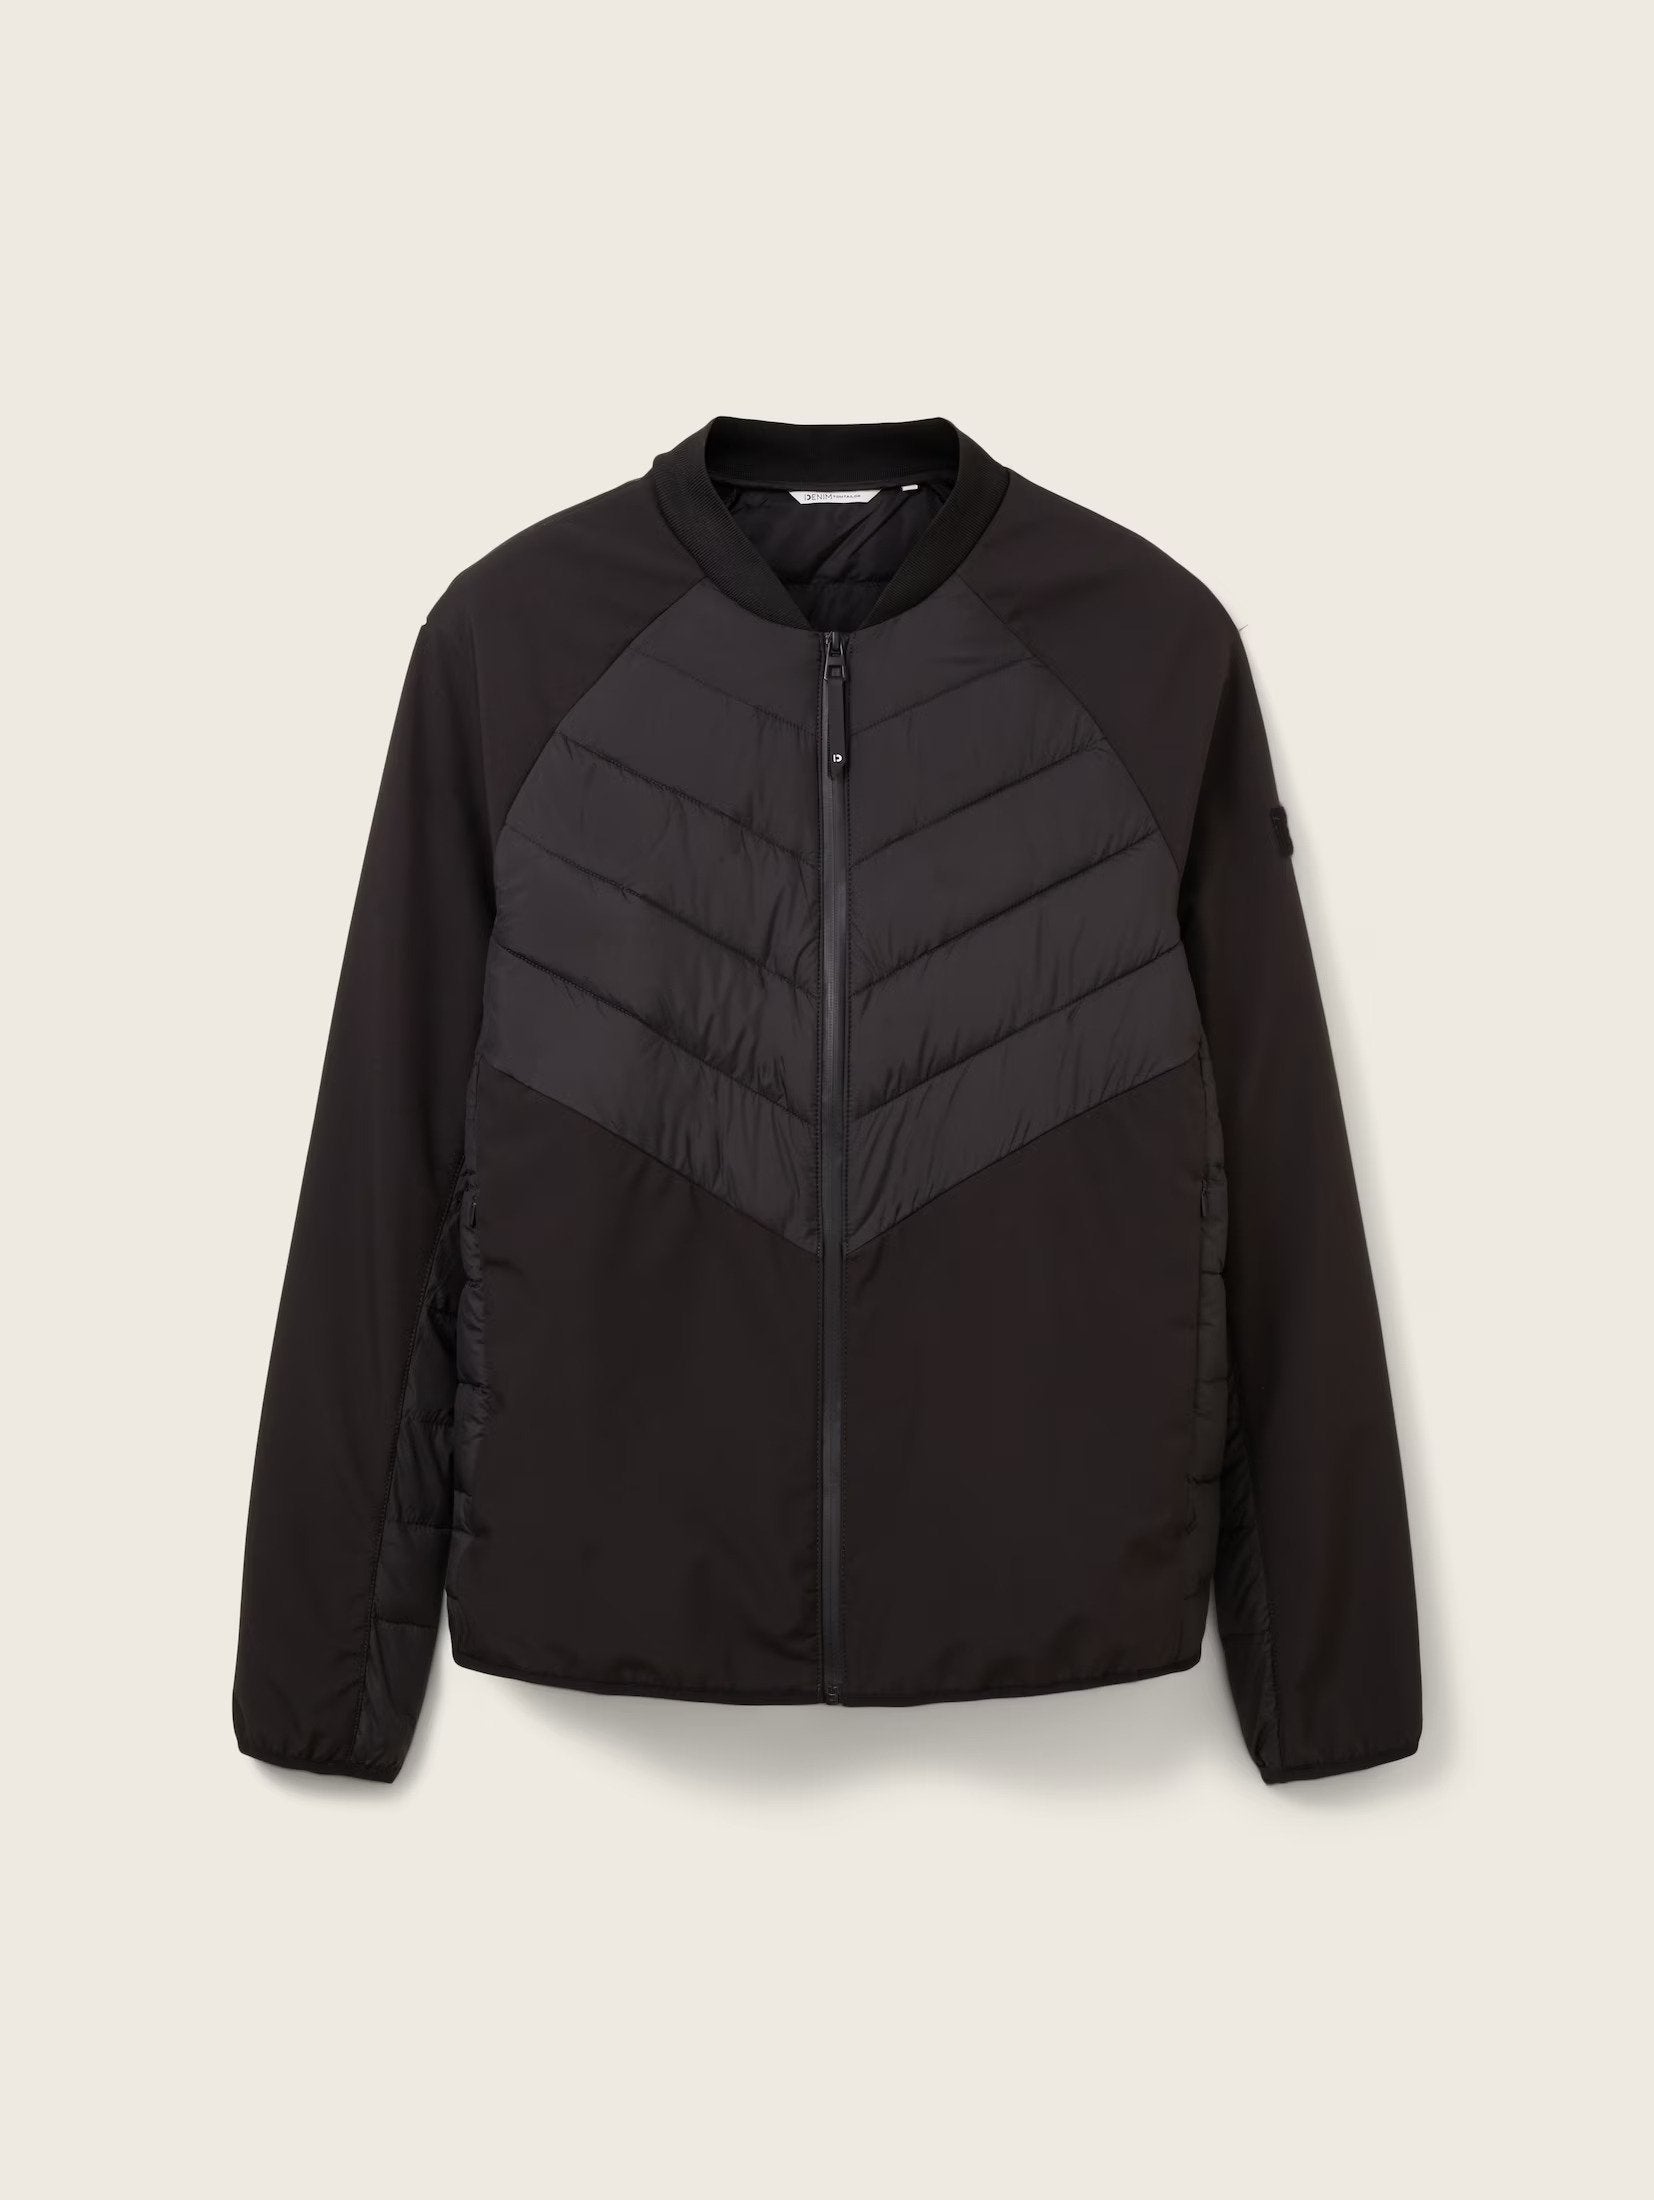 Tom Tailor Black Hybrid Jacket